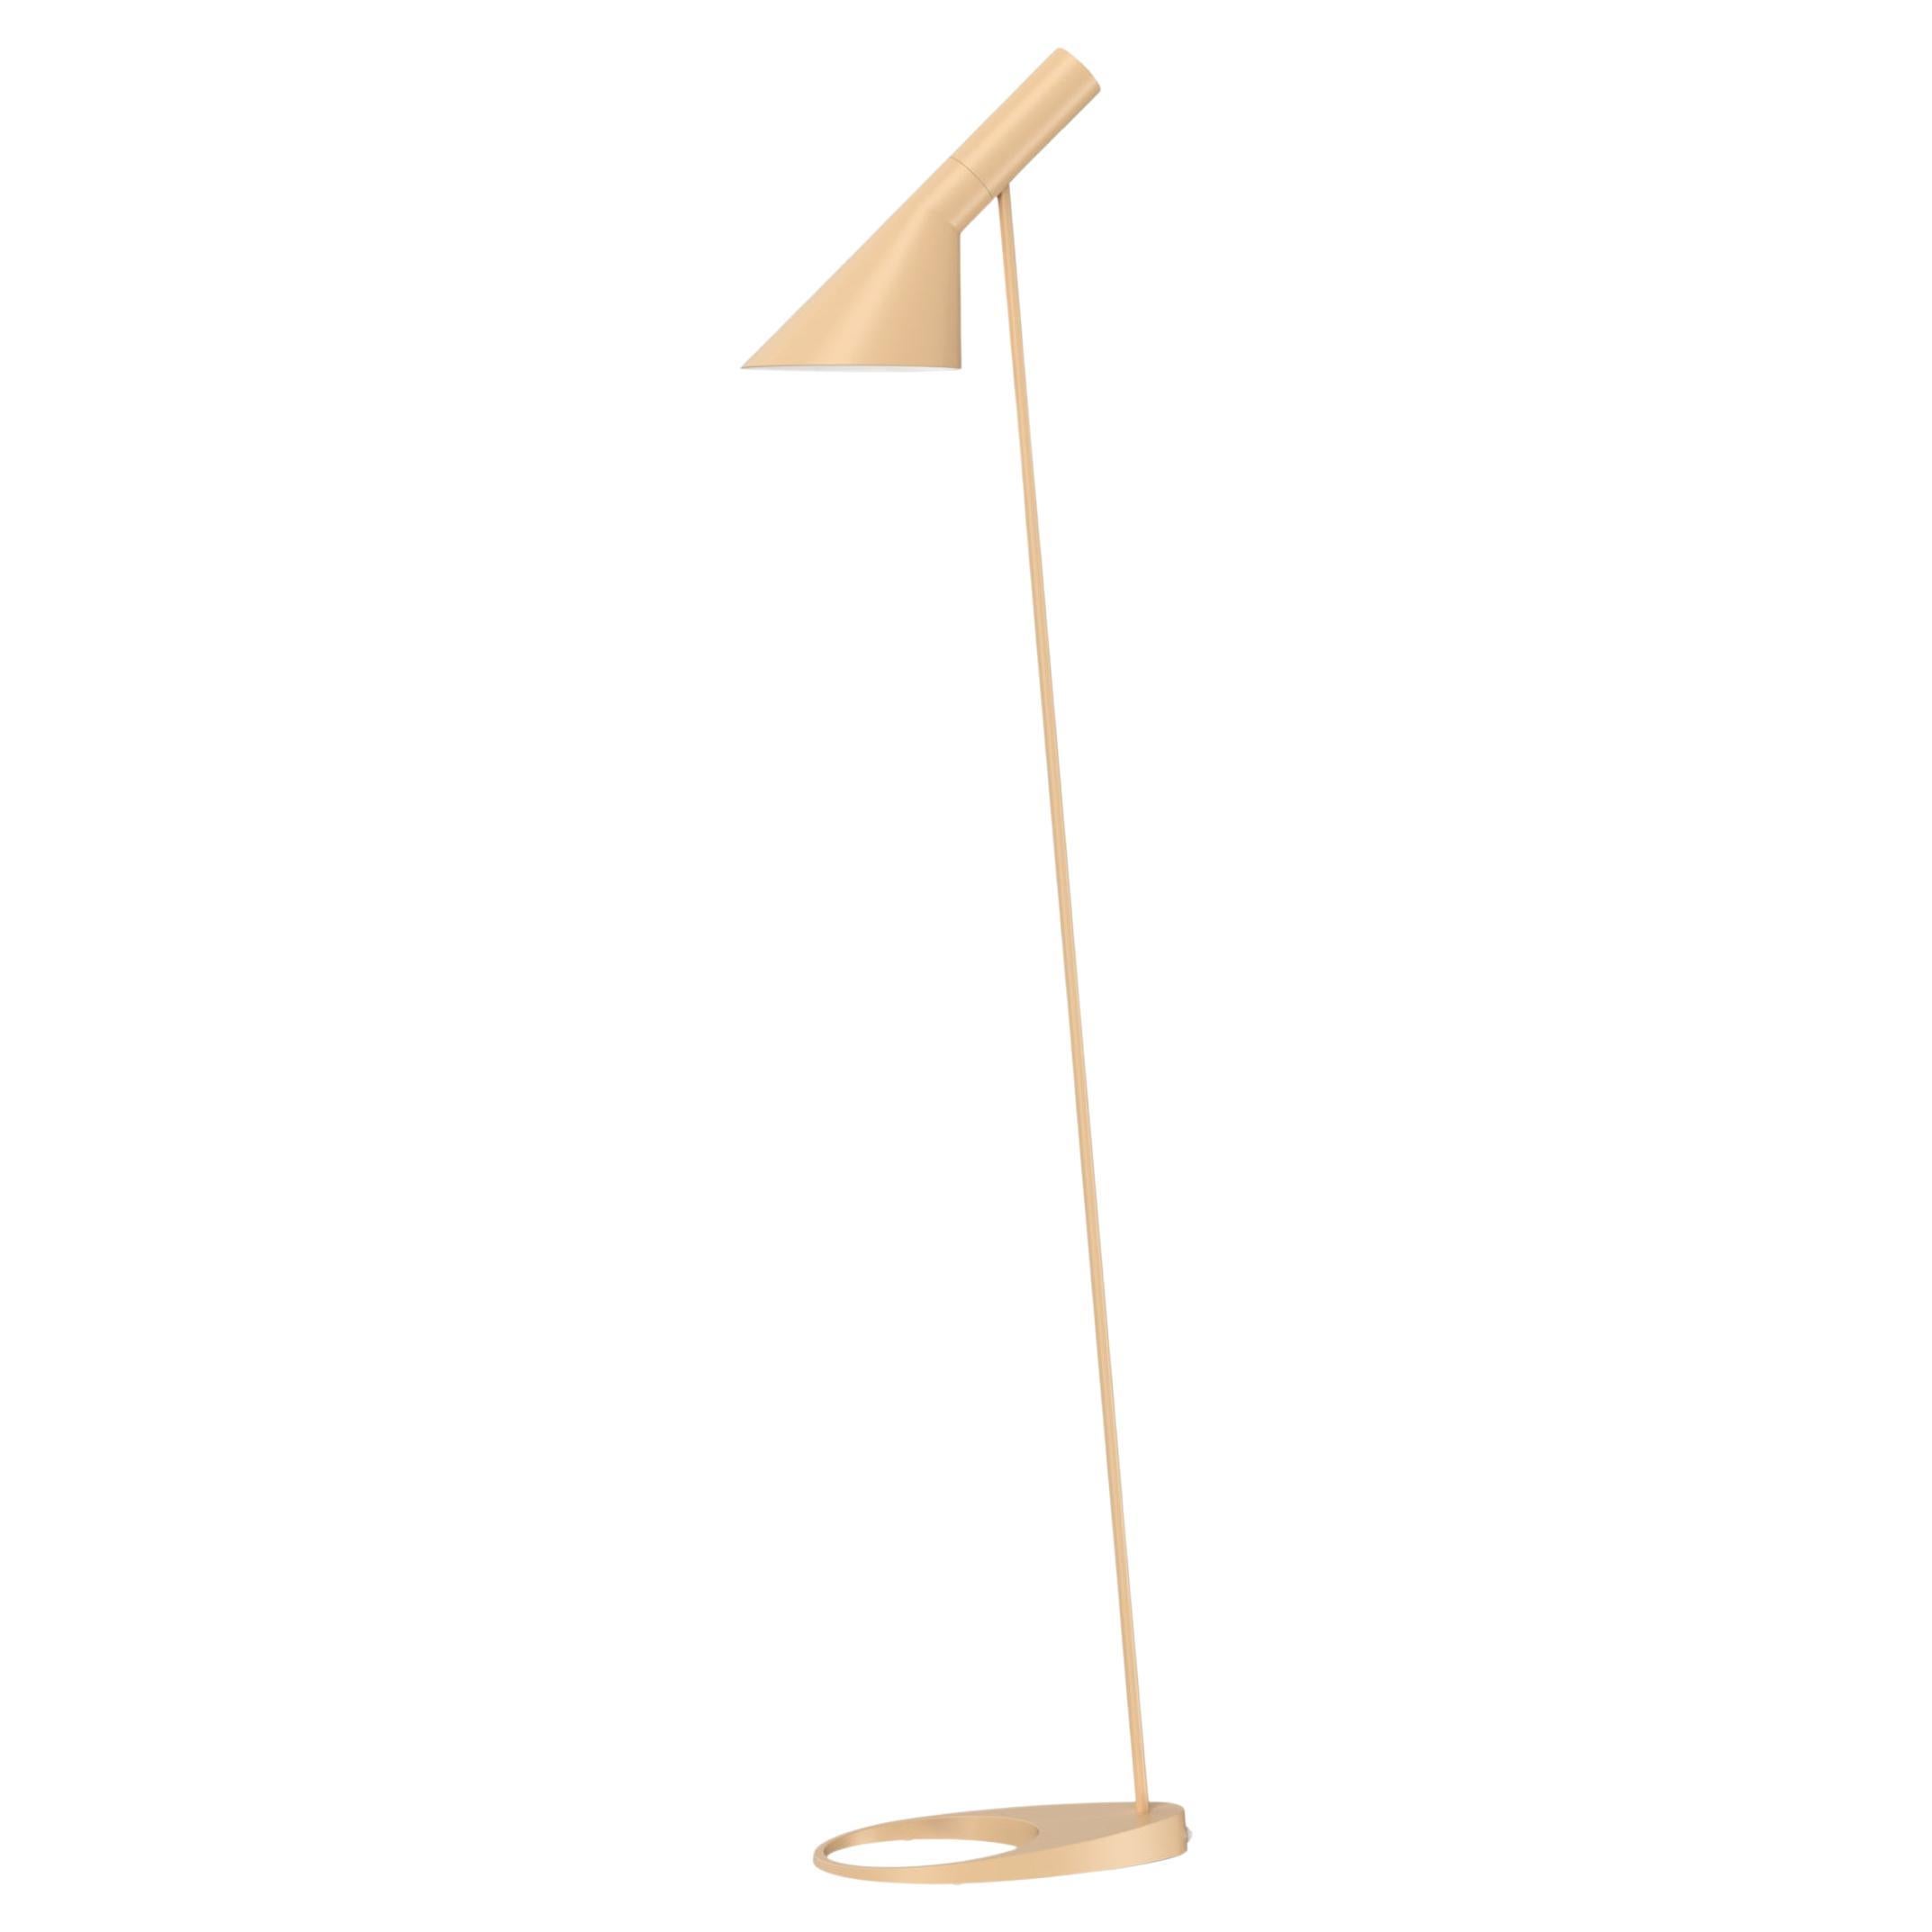 Arne Jacobsen AJ Floor Lamp in Warm Sand for Louis Poulsen For Sale